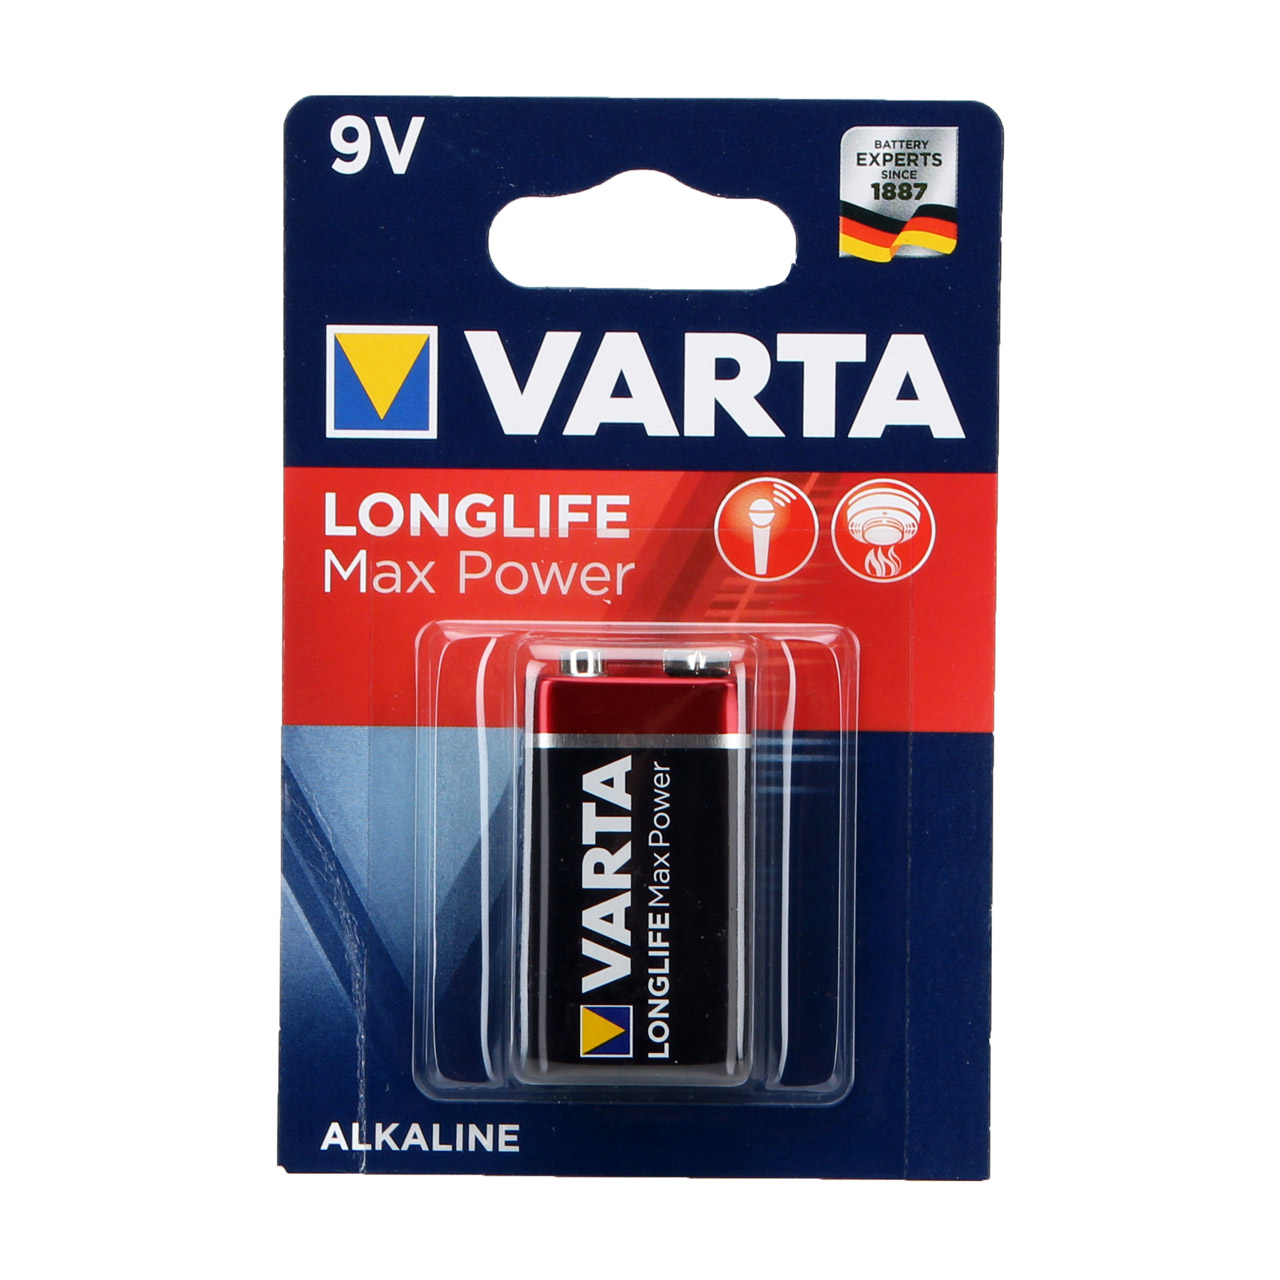 VARTA LONGLIFE MAX POWER ALKALINE Batterie 9V E-BLOCK 4722 6LR61 MN1604